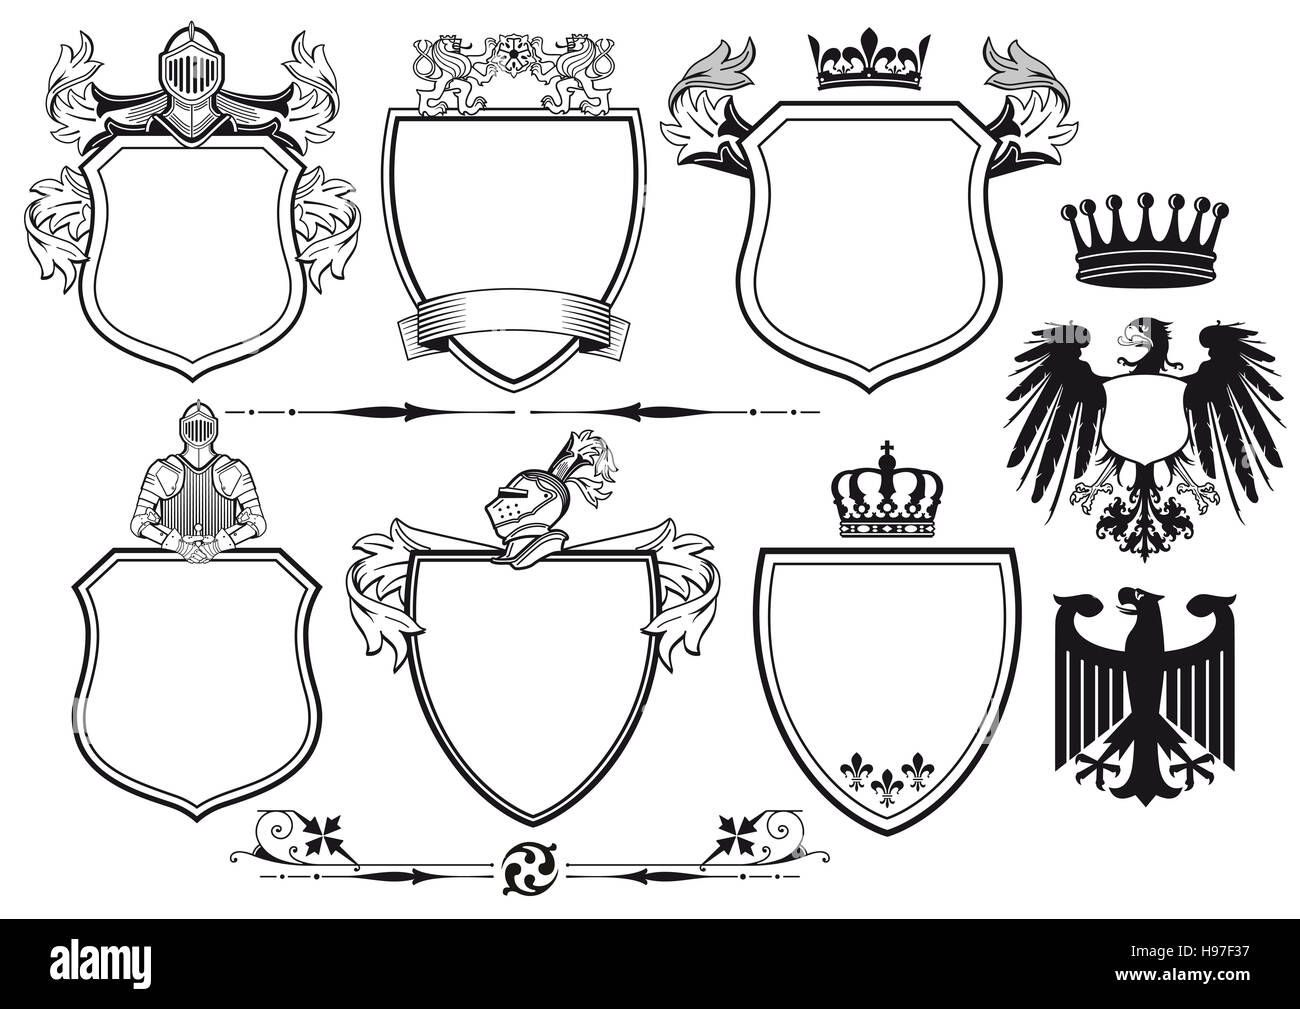 Royal Knights Coat of Arms Stock Photo